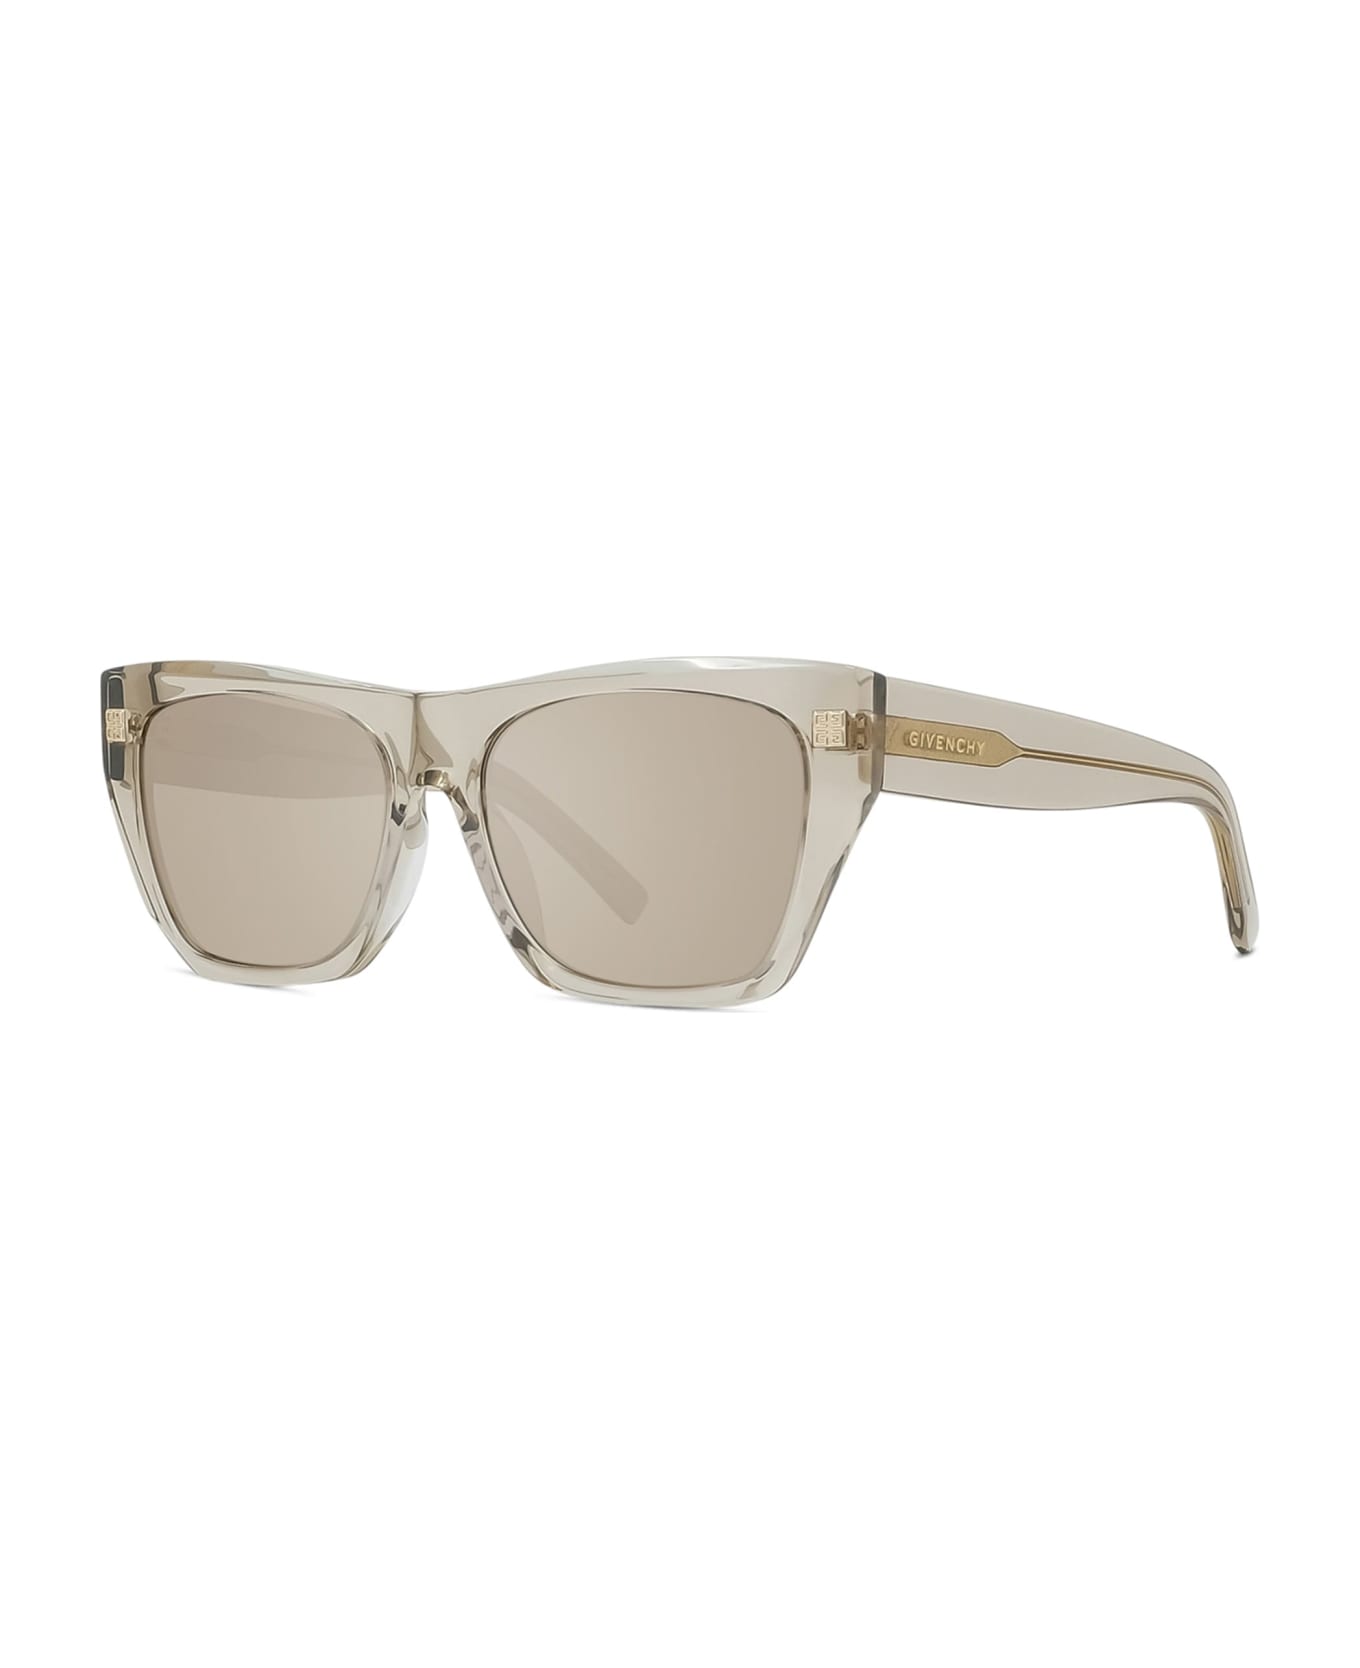 Givenchy Eyewear Gv40061u - Shiny LAGERFELD Brow Sunglasses - brown